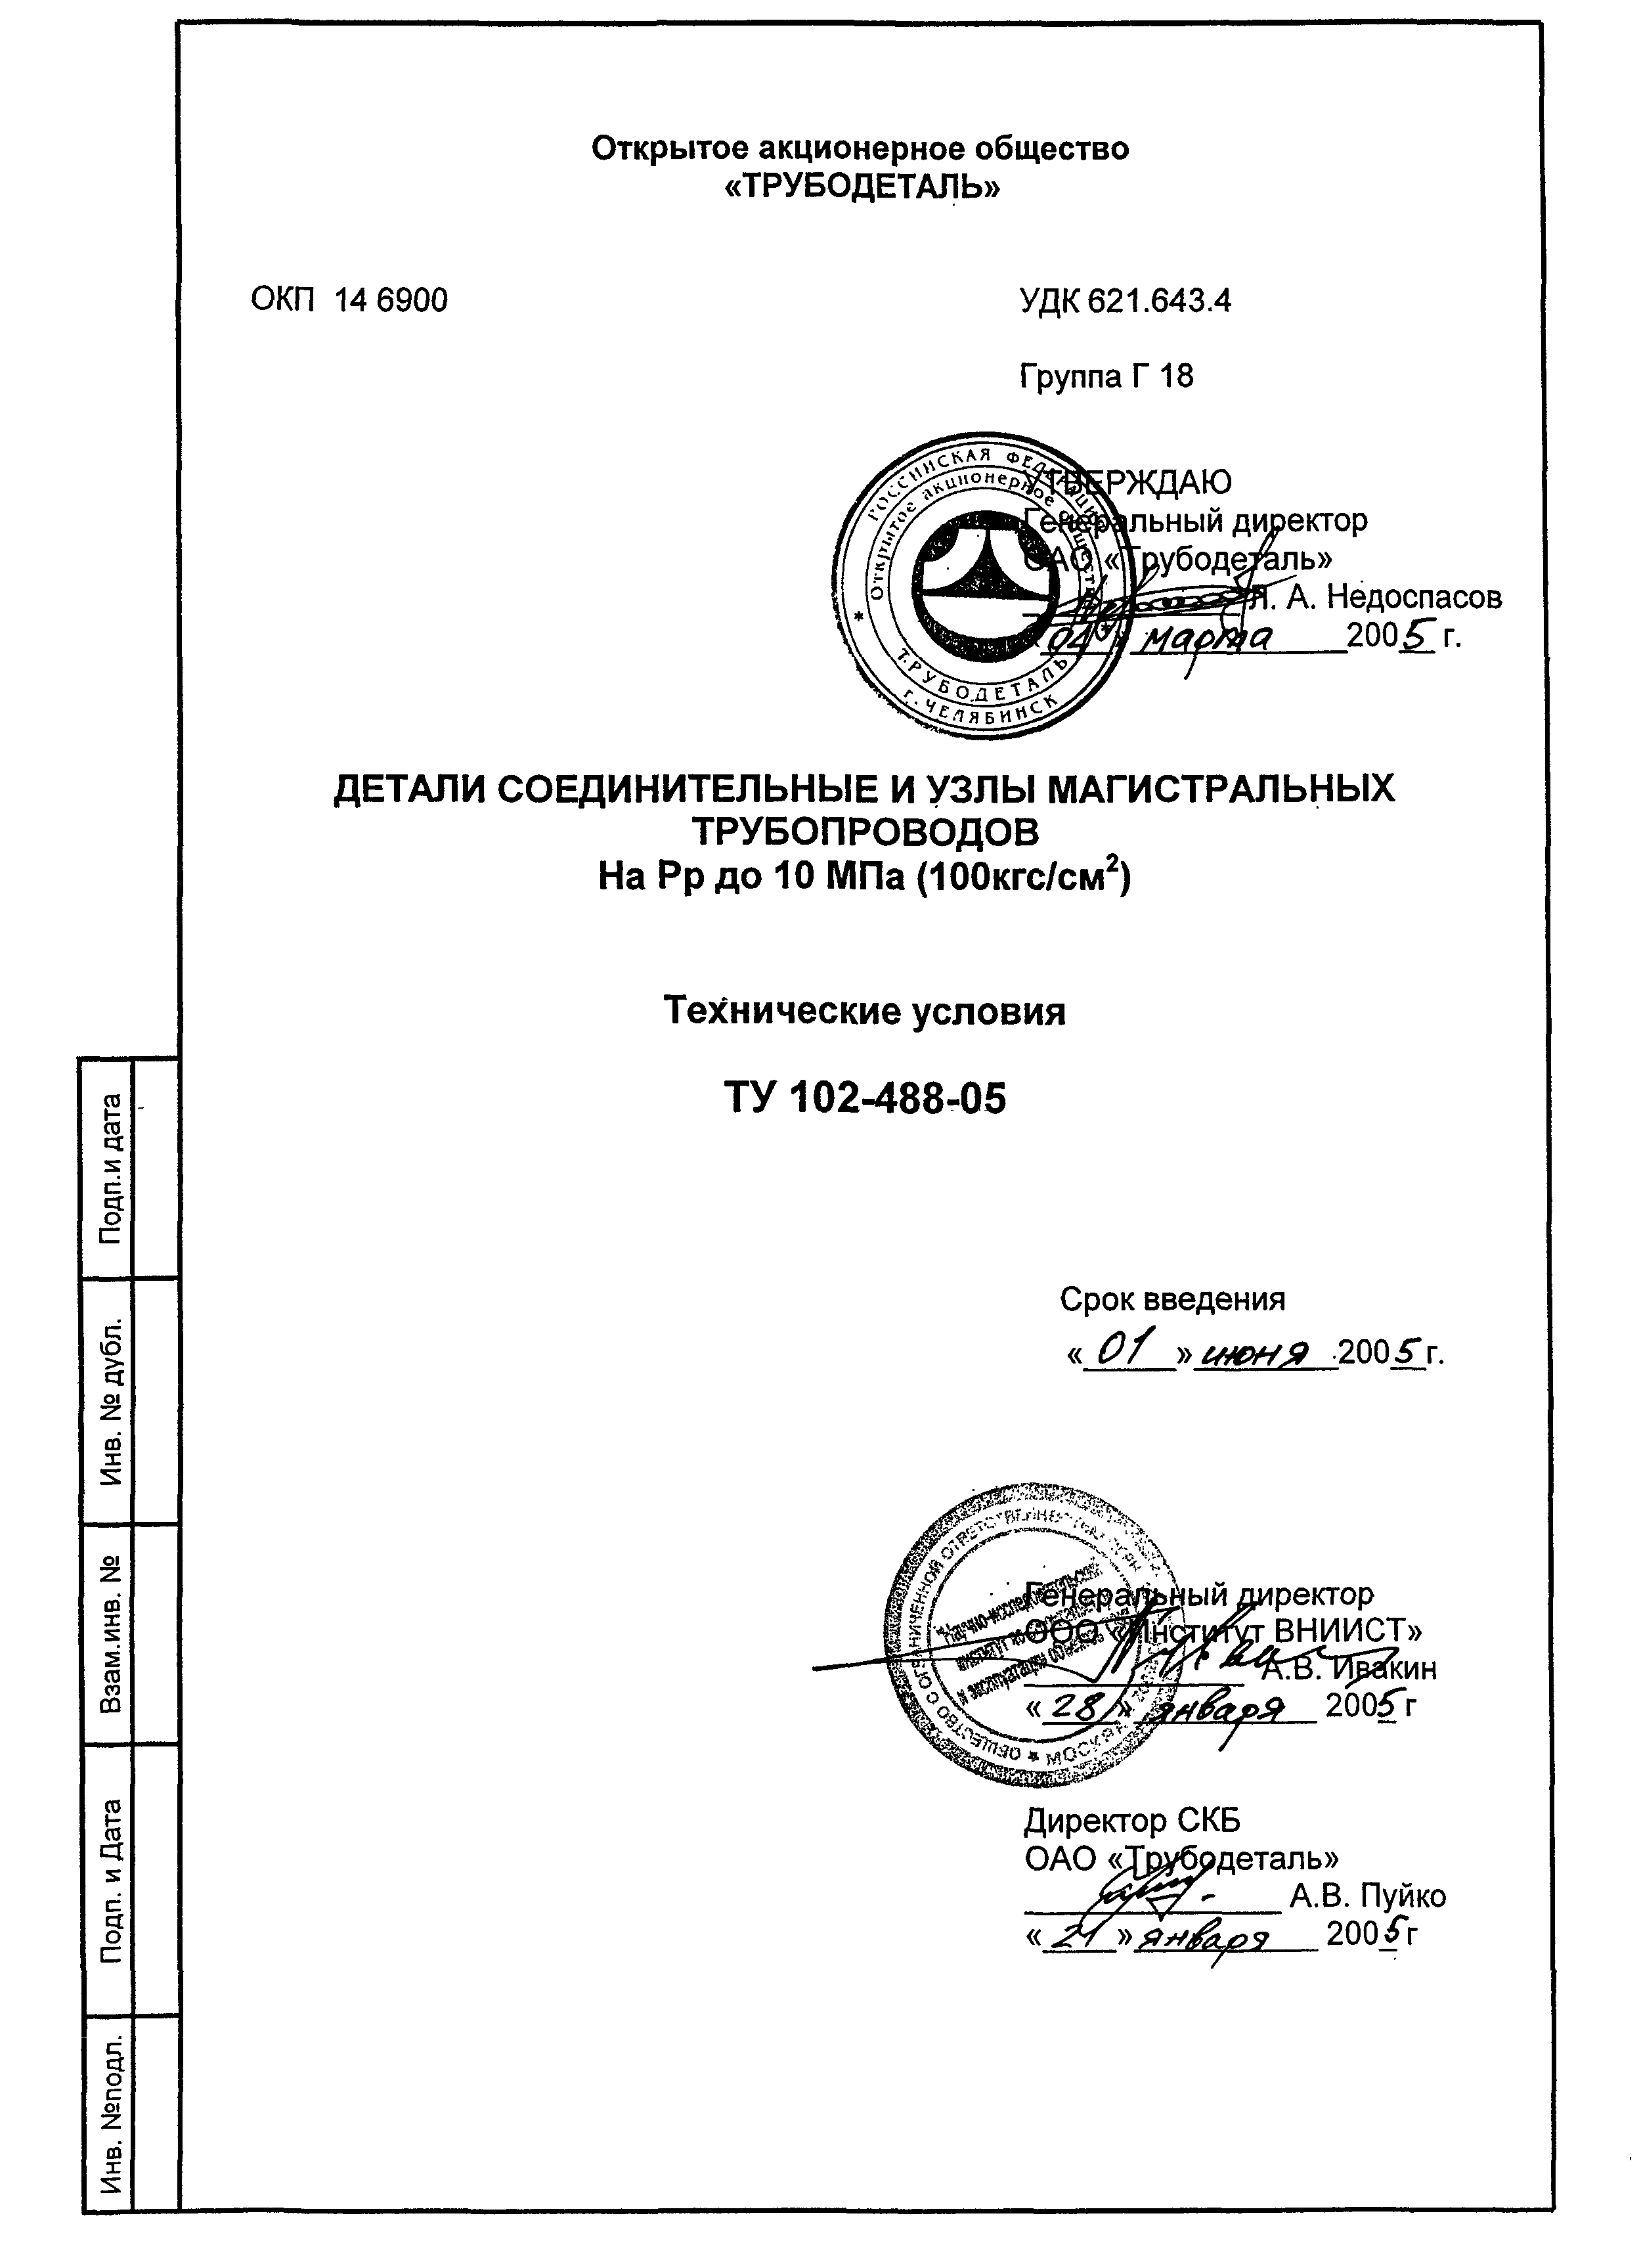 ТУ 102-488-05